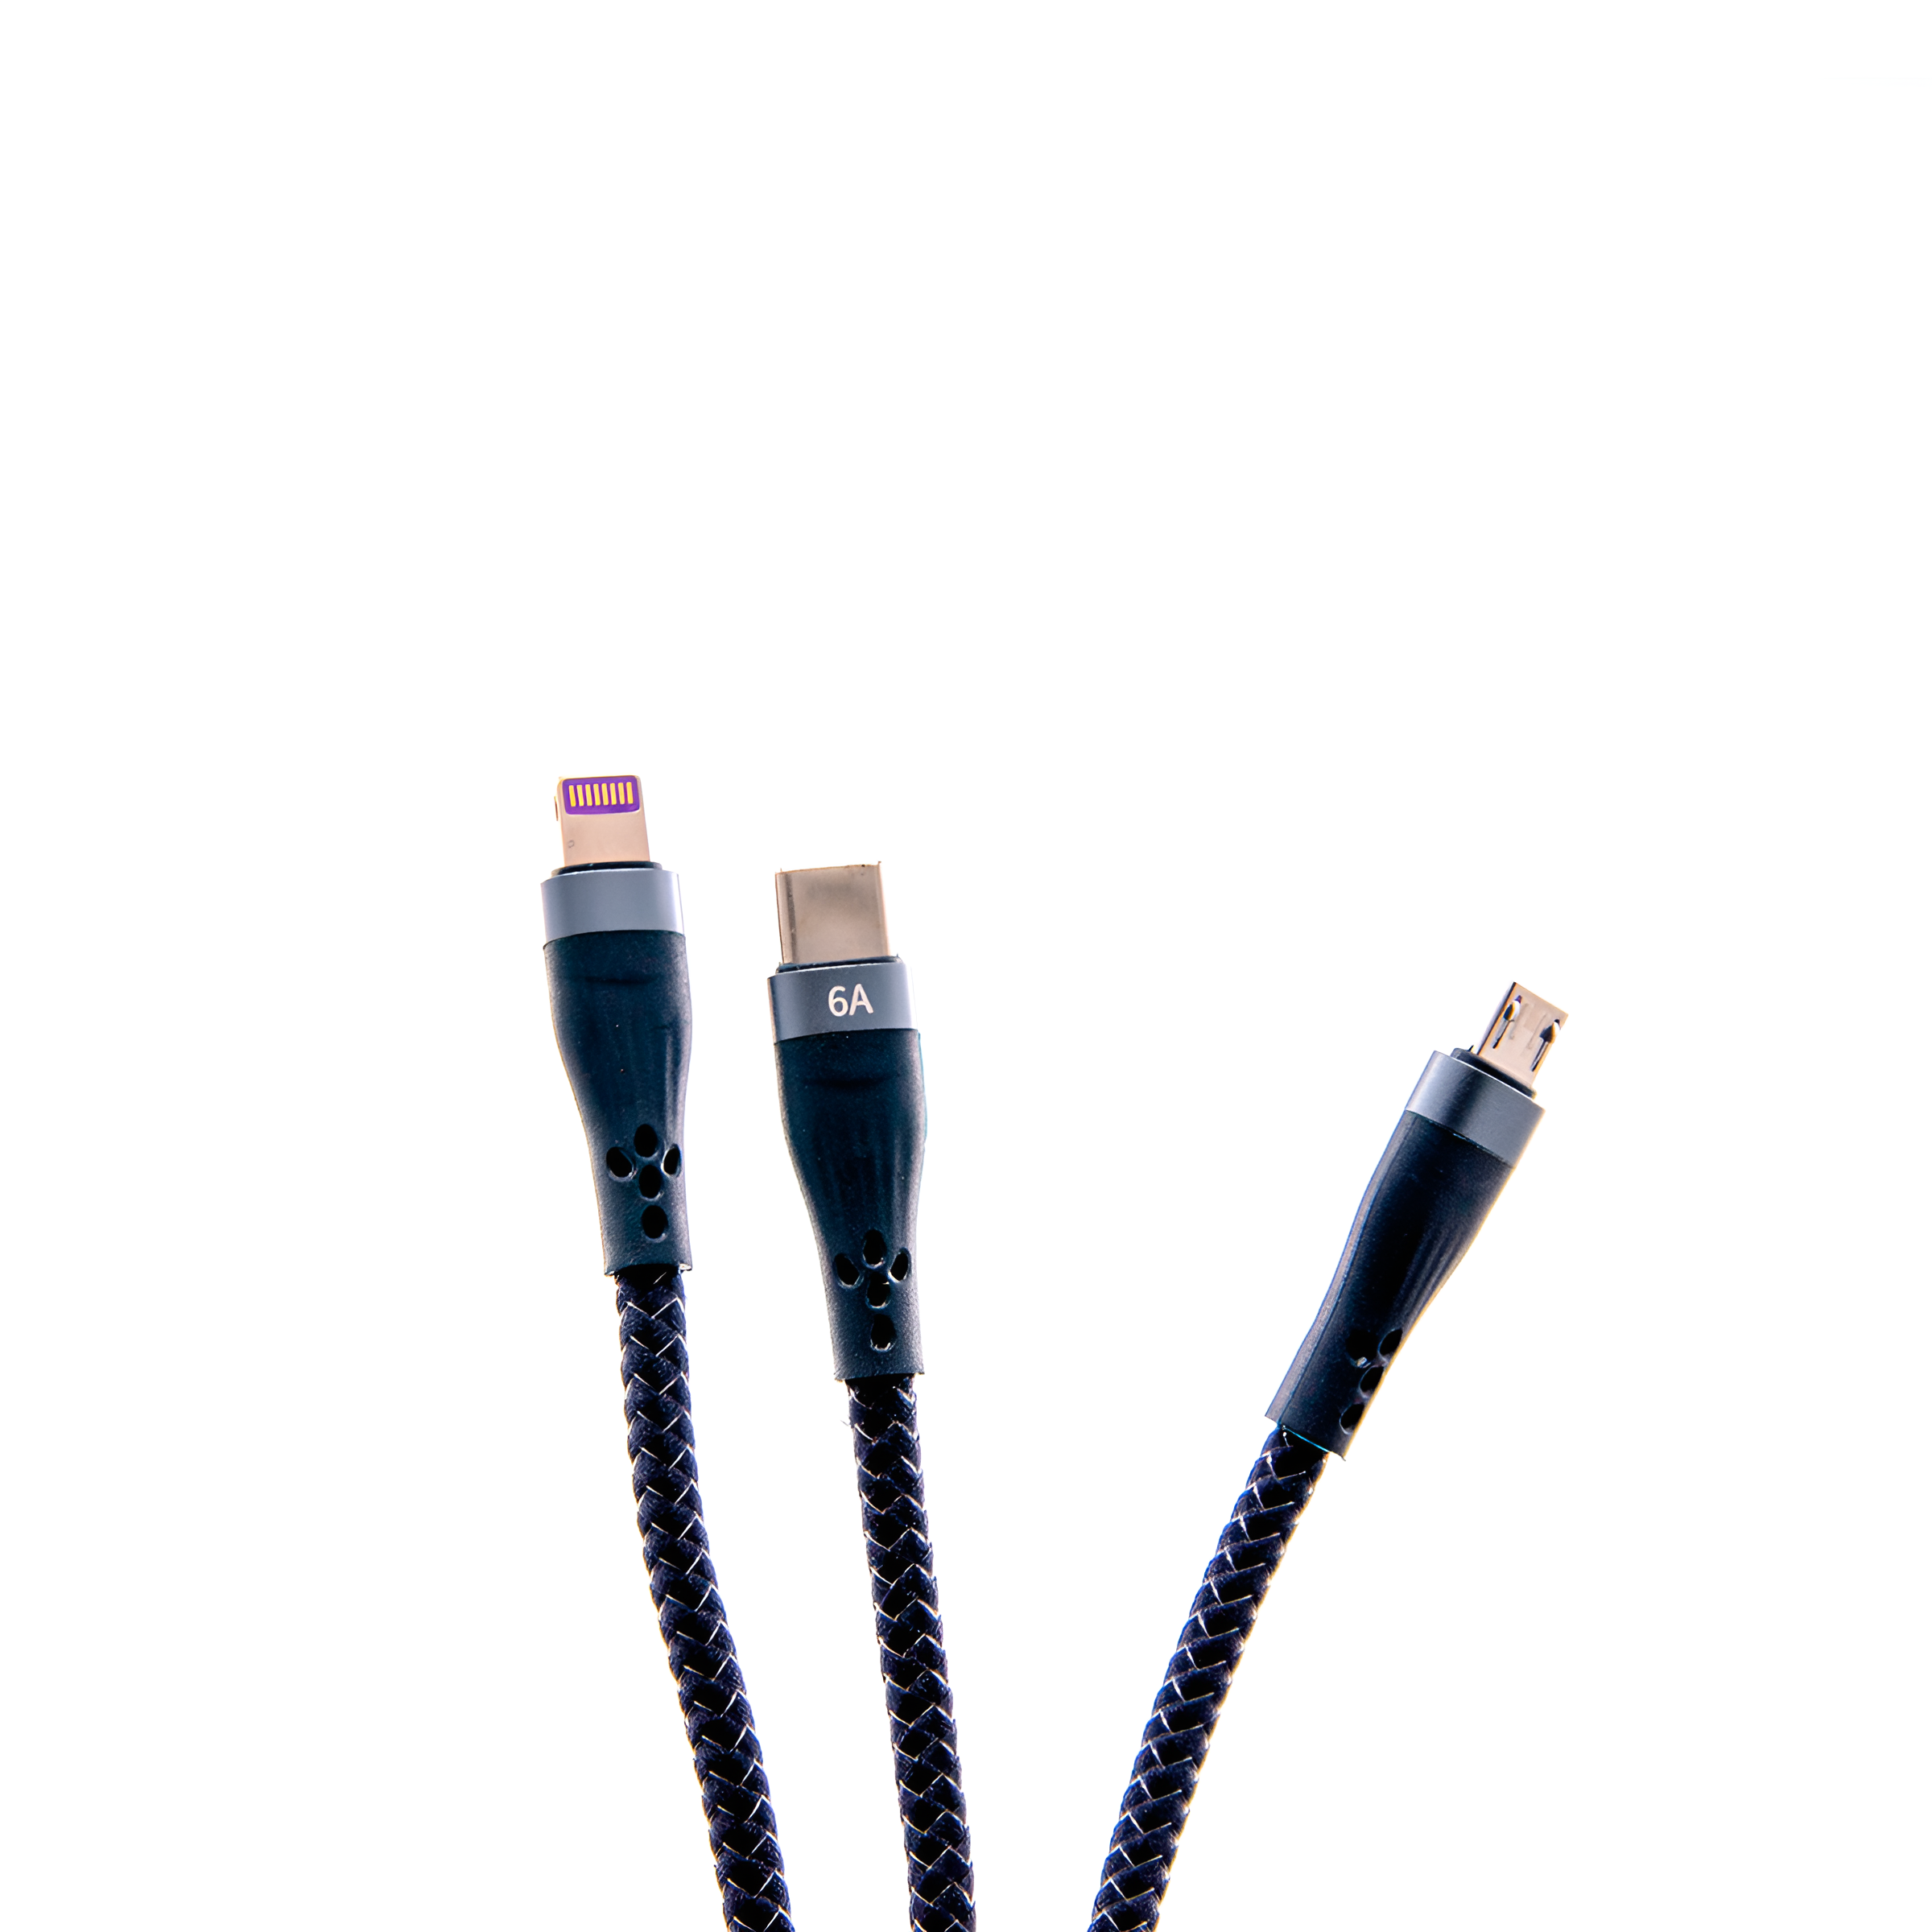 Usb data cable remax rc-199th 3in1 66w (6a)  plavi 1.2m 